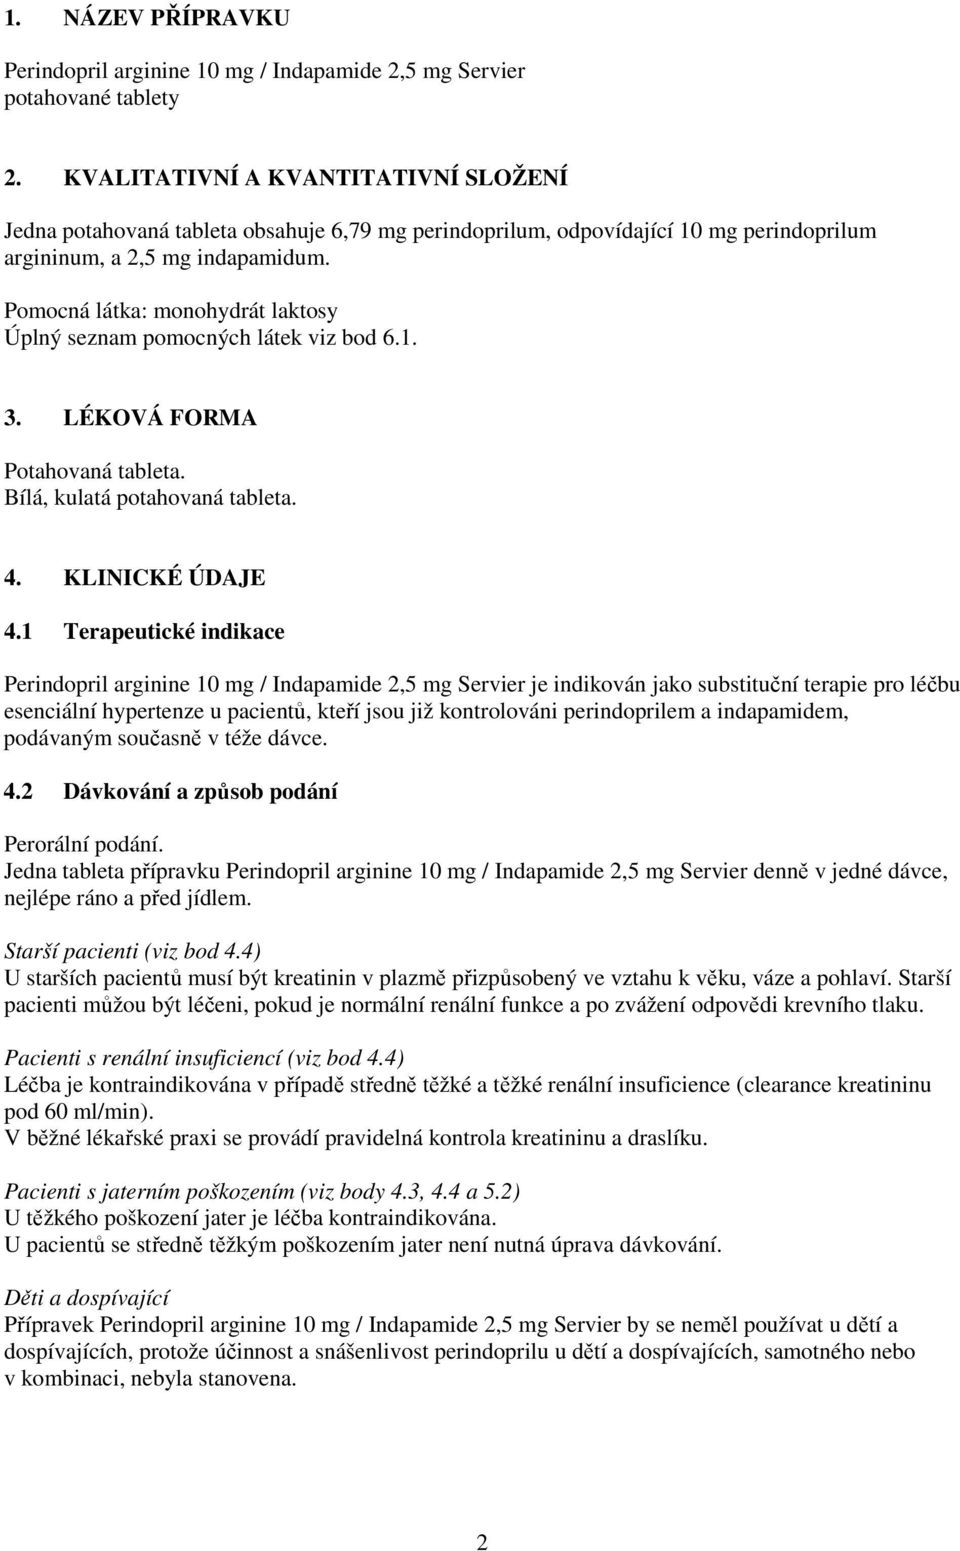 Pomocná látka: monohydrát laktosy Úplný seznam pomocných látek viz bod 6.1. 3. LÉKOVÁ FORMA Potahovaná tableta. Bílá, kulatá potahovaná tableta. 4. KLINICKÉ ÚDAJE 4.